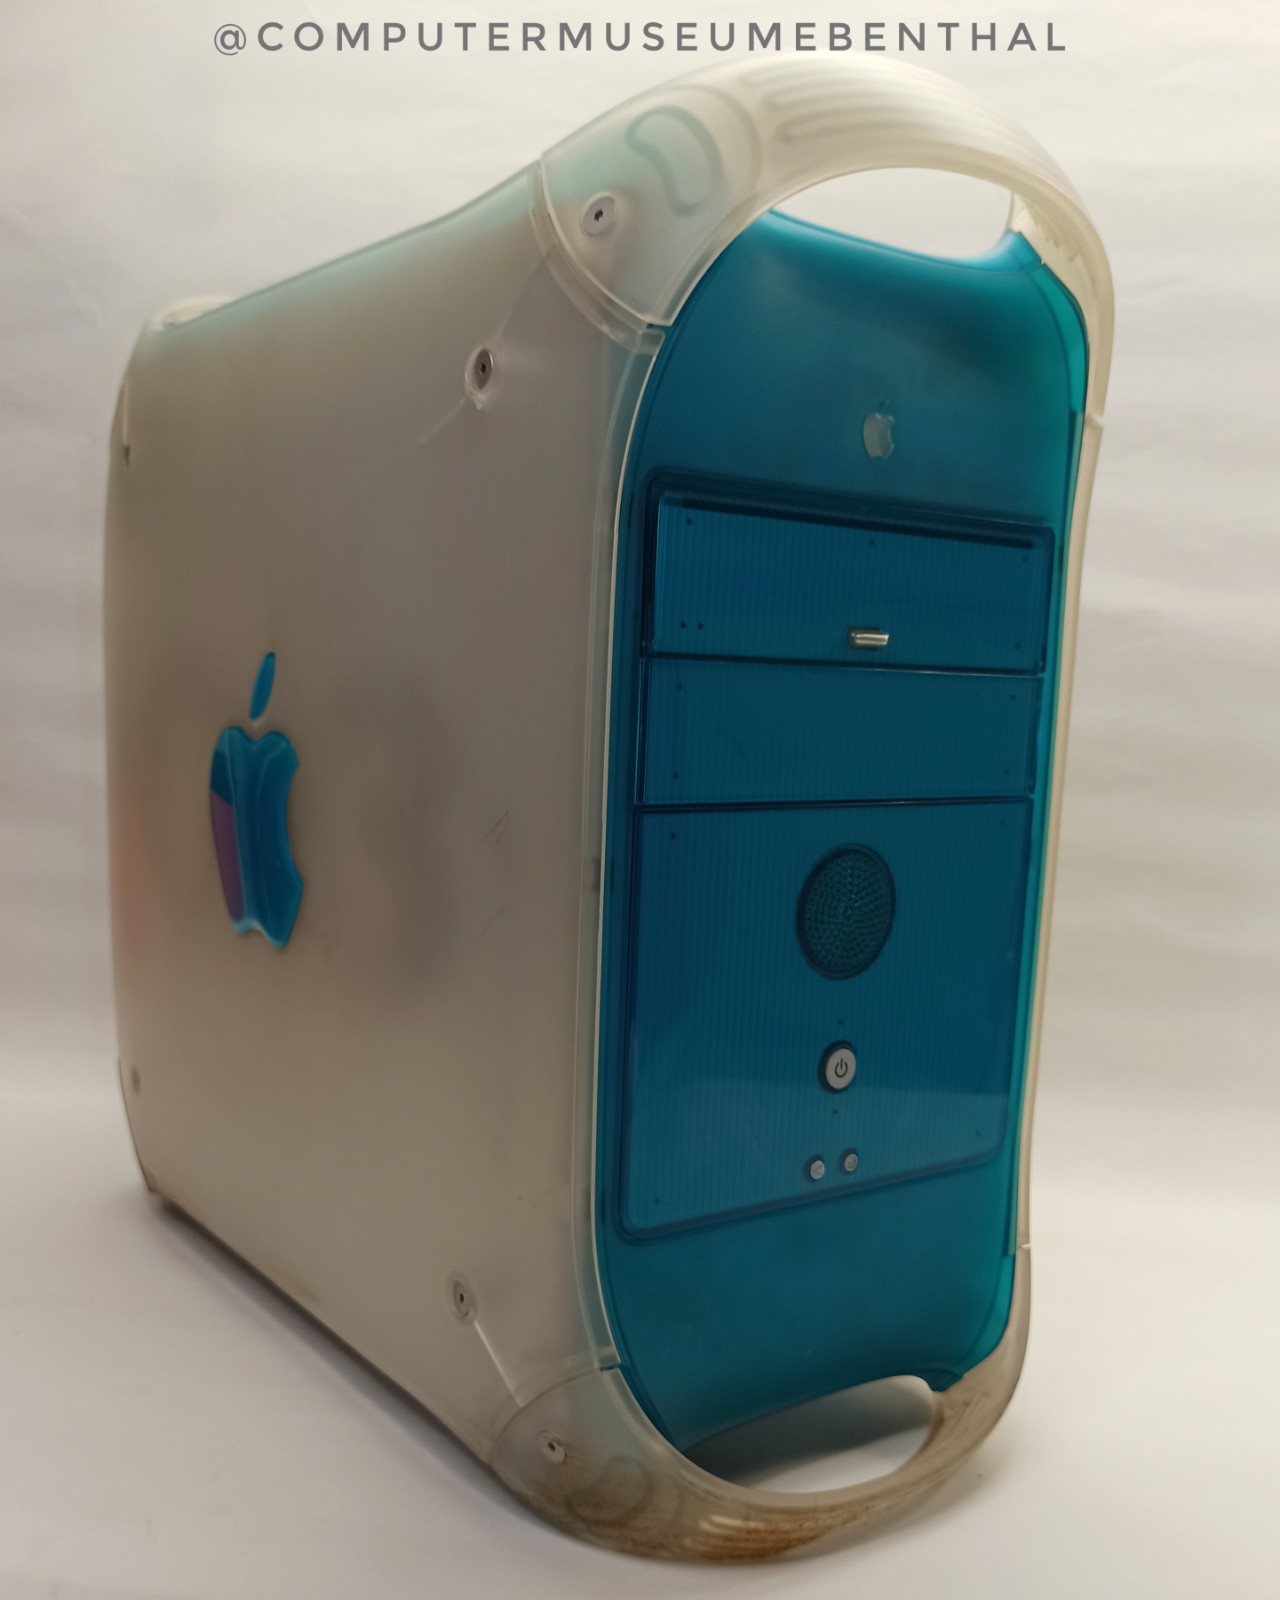 Power Macintosh G3 blue and white